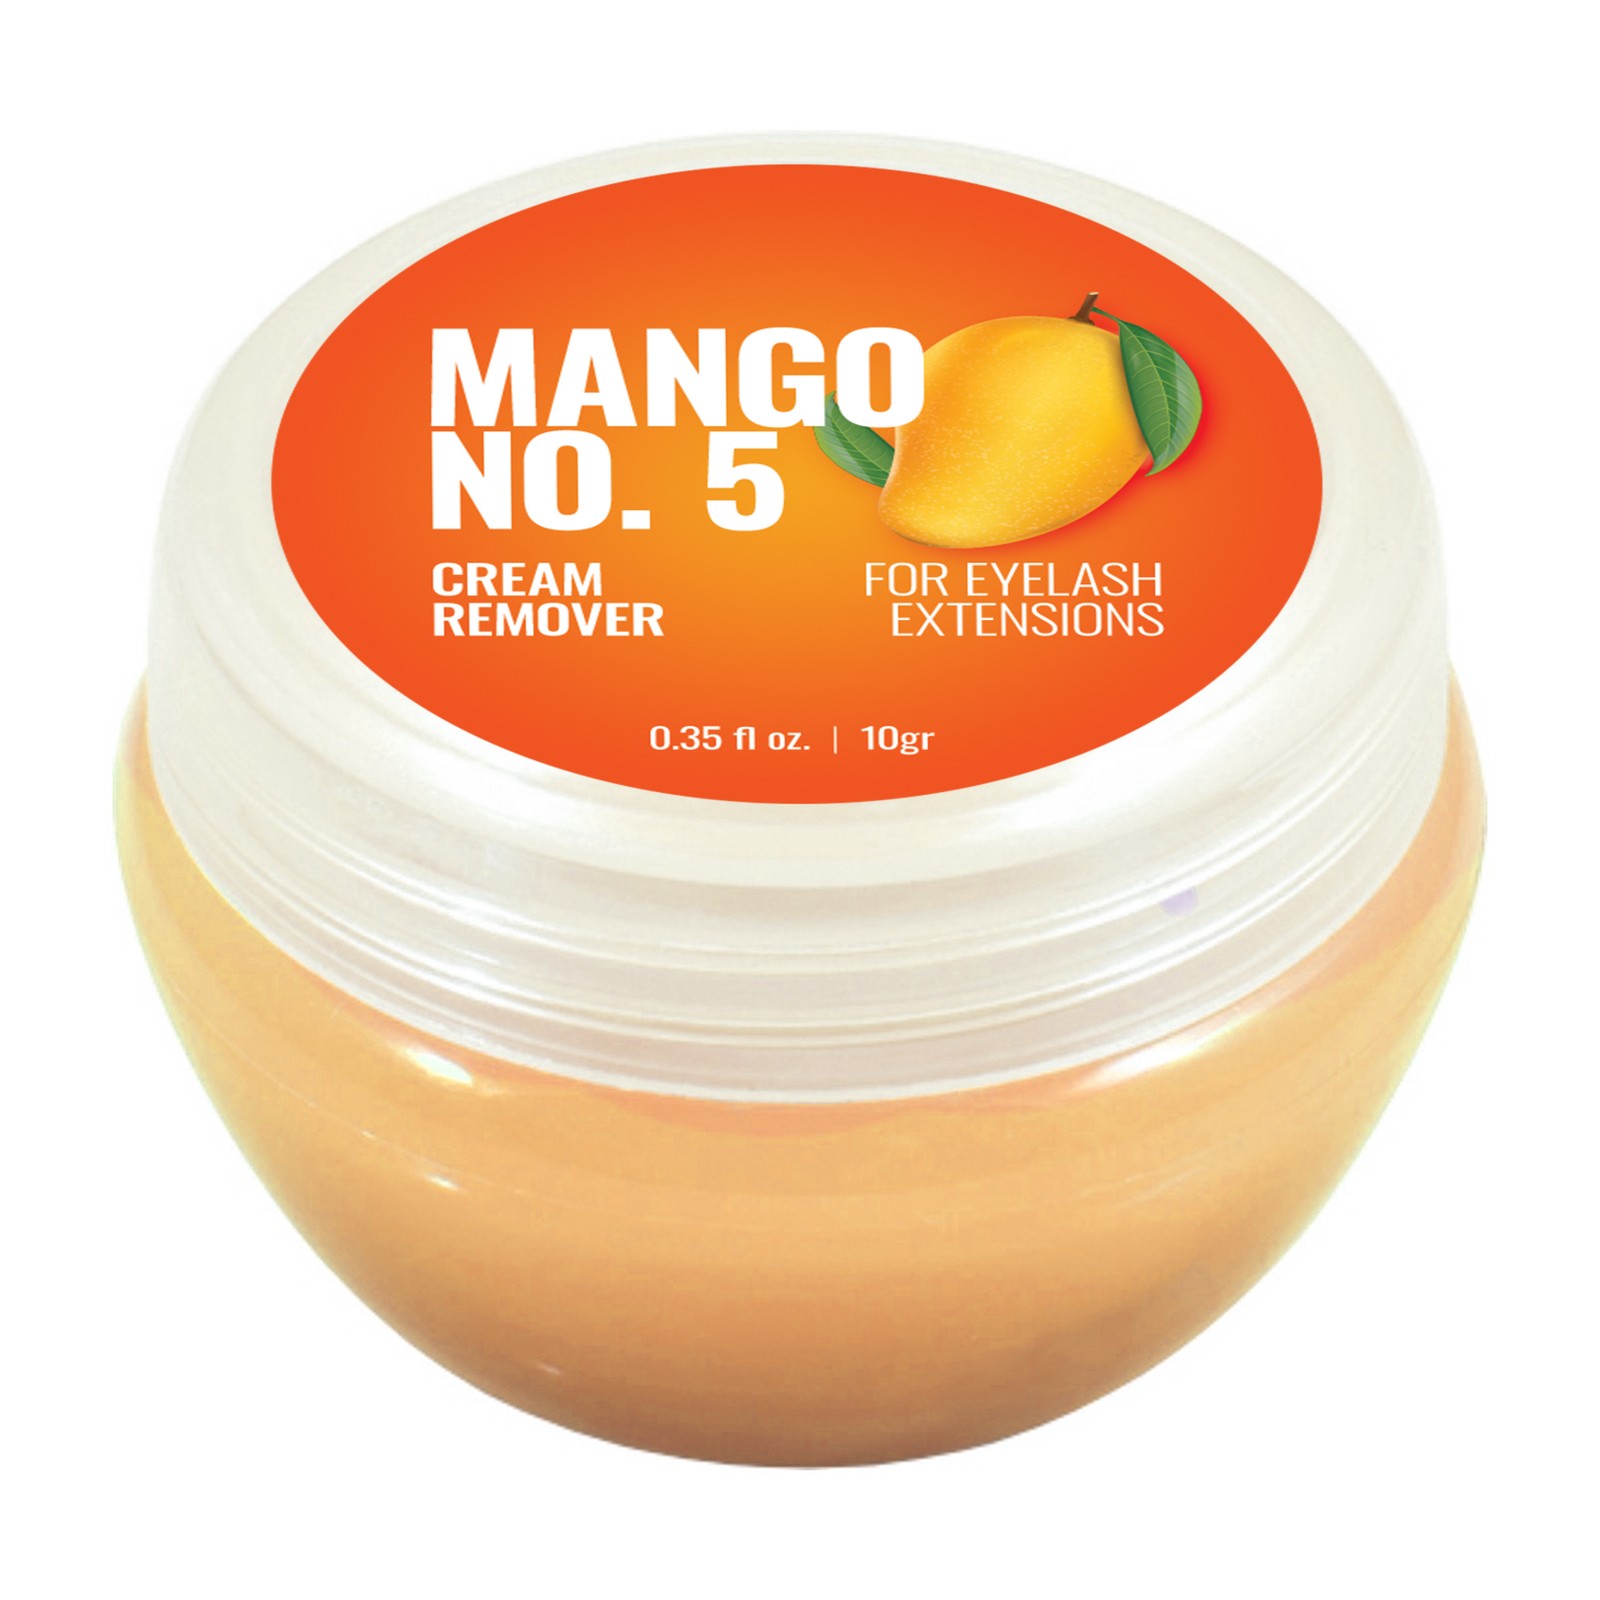 Grado médico -  Crema desmaquillante -  10 gr Mango Nº 5